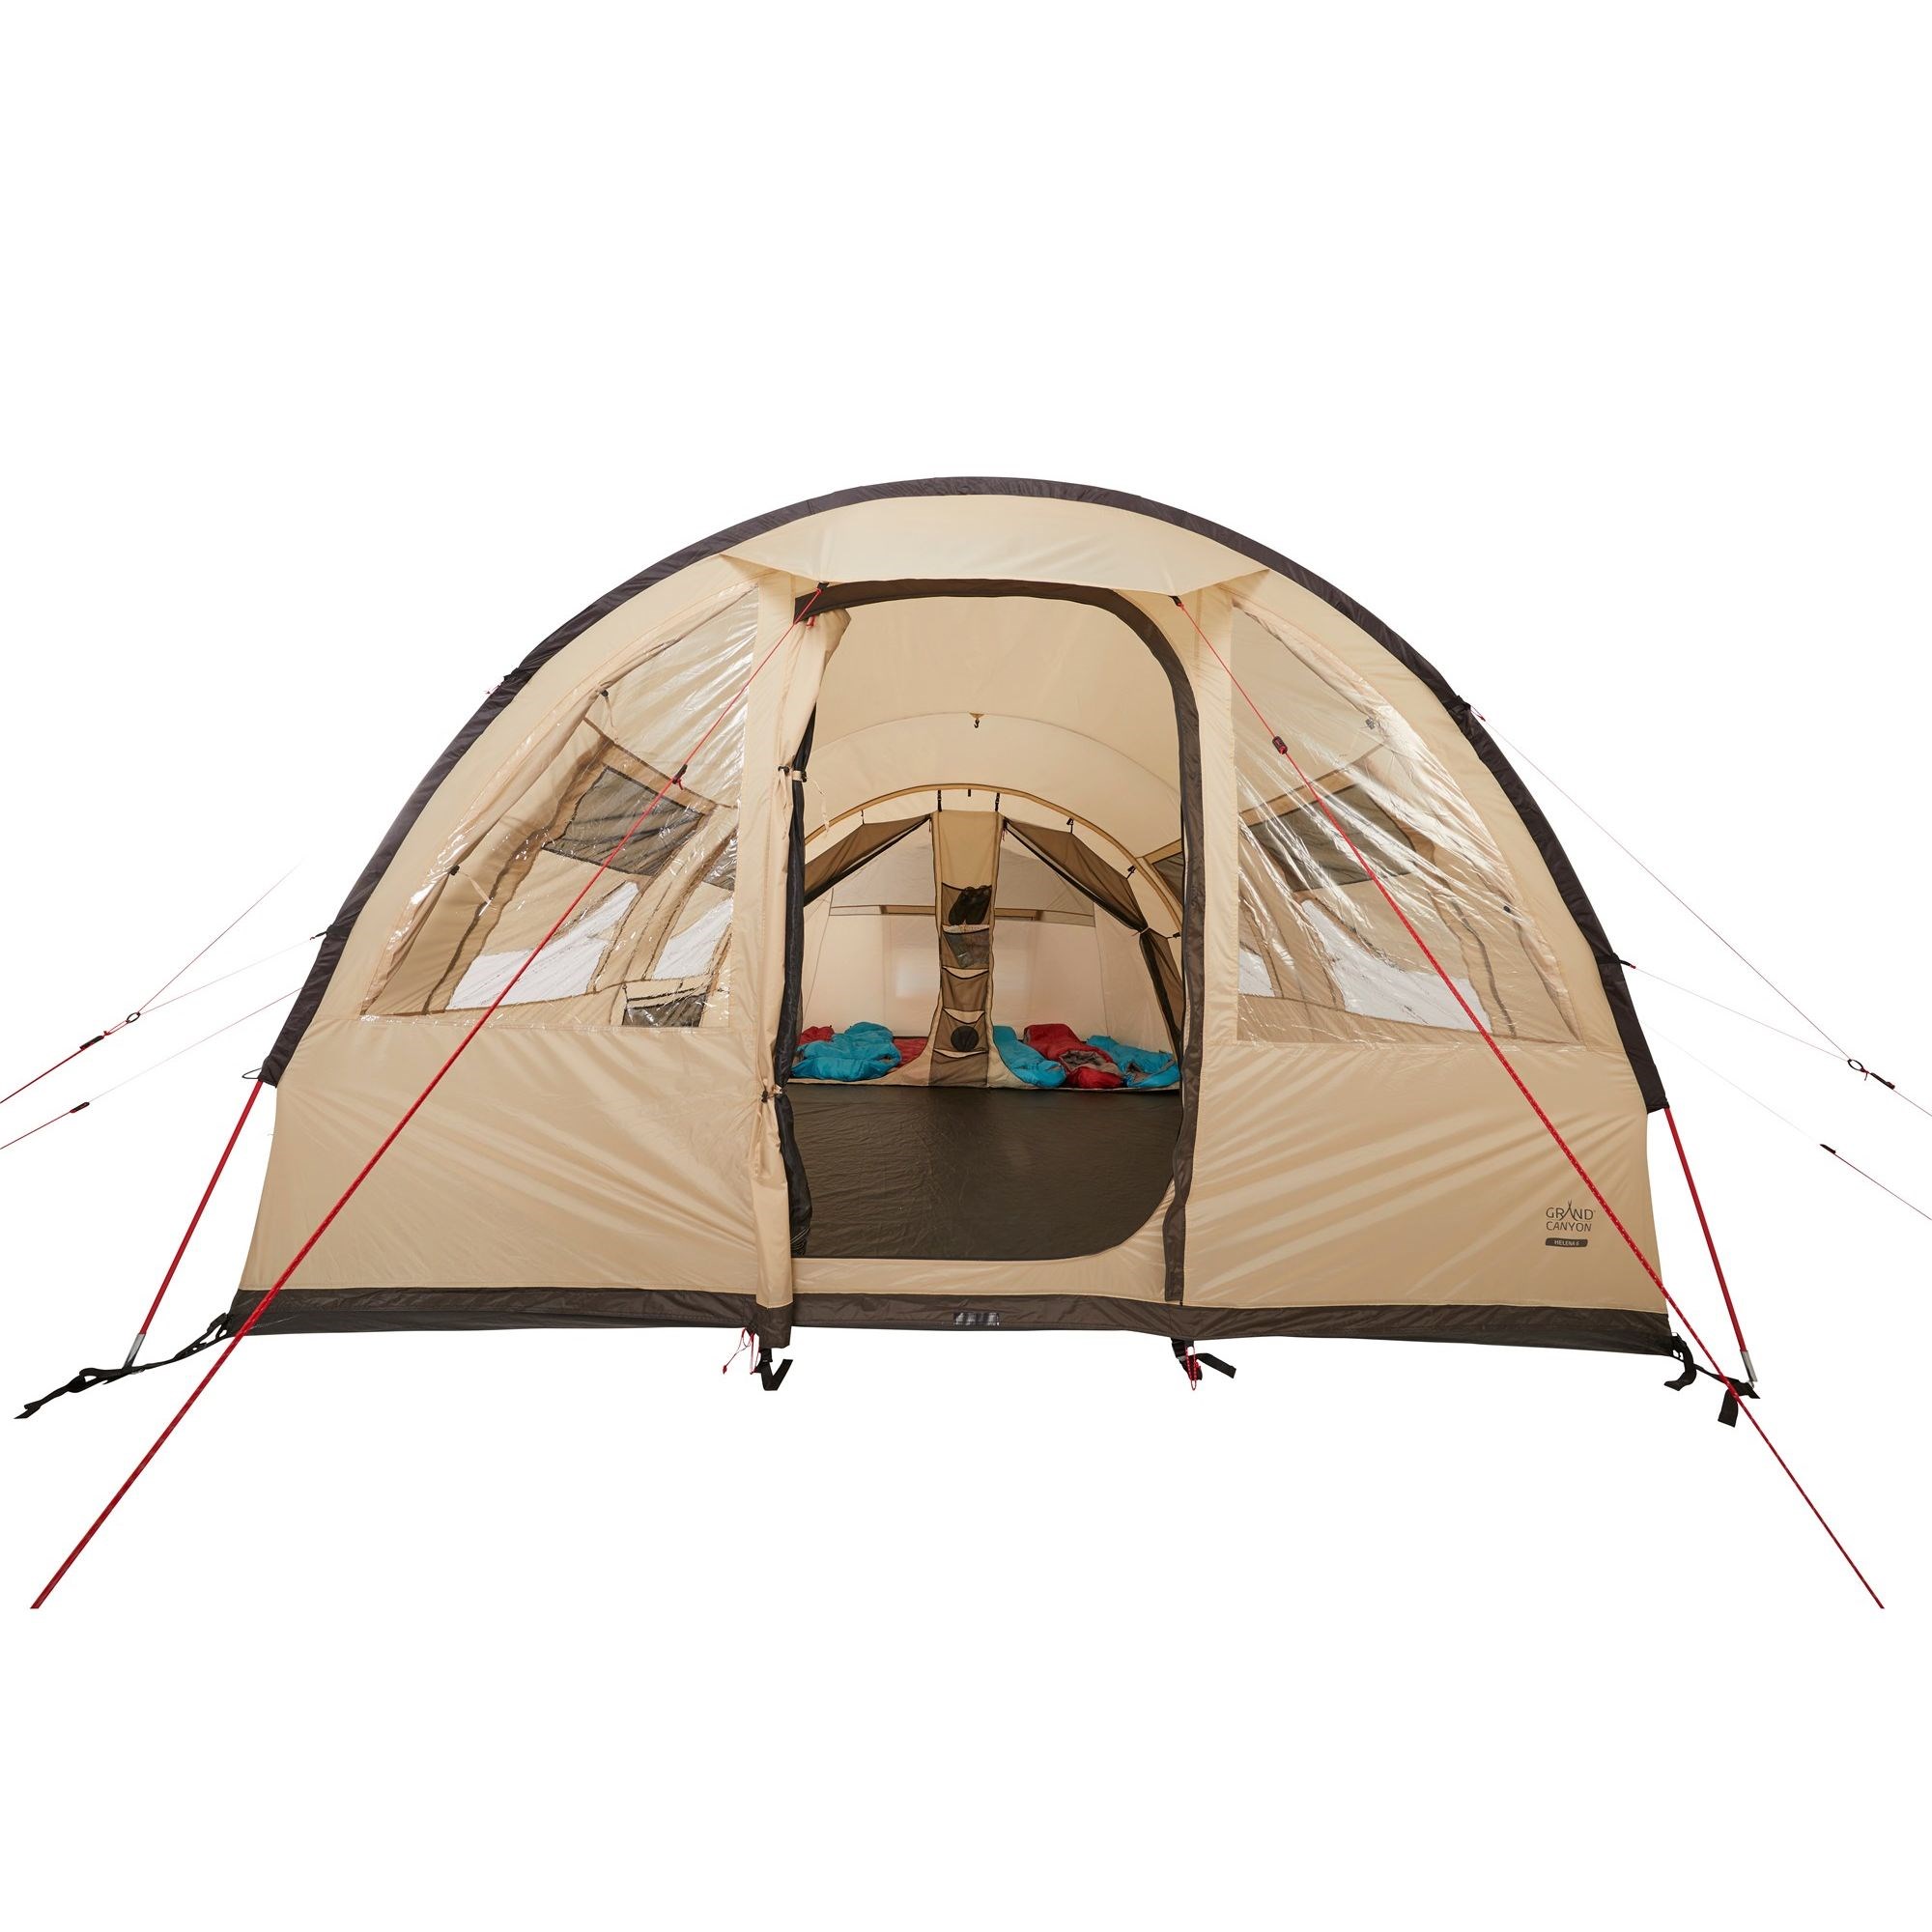 Tent HELENA 6 DESERT GRAND CANYON 330033 L-11